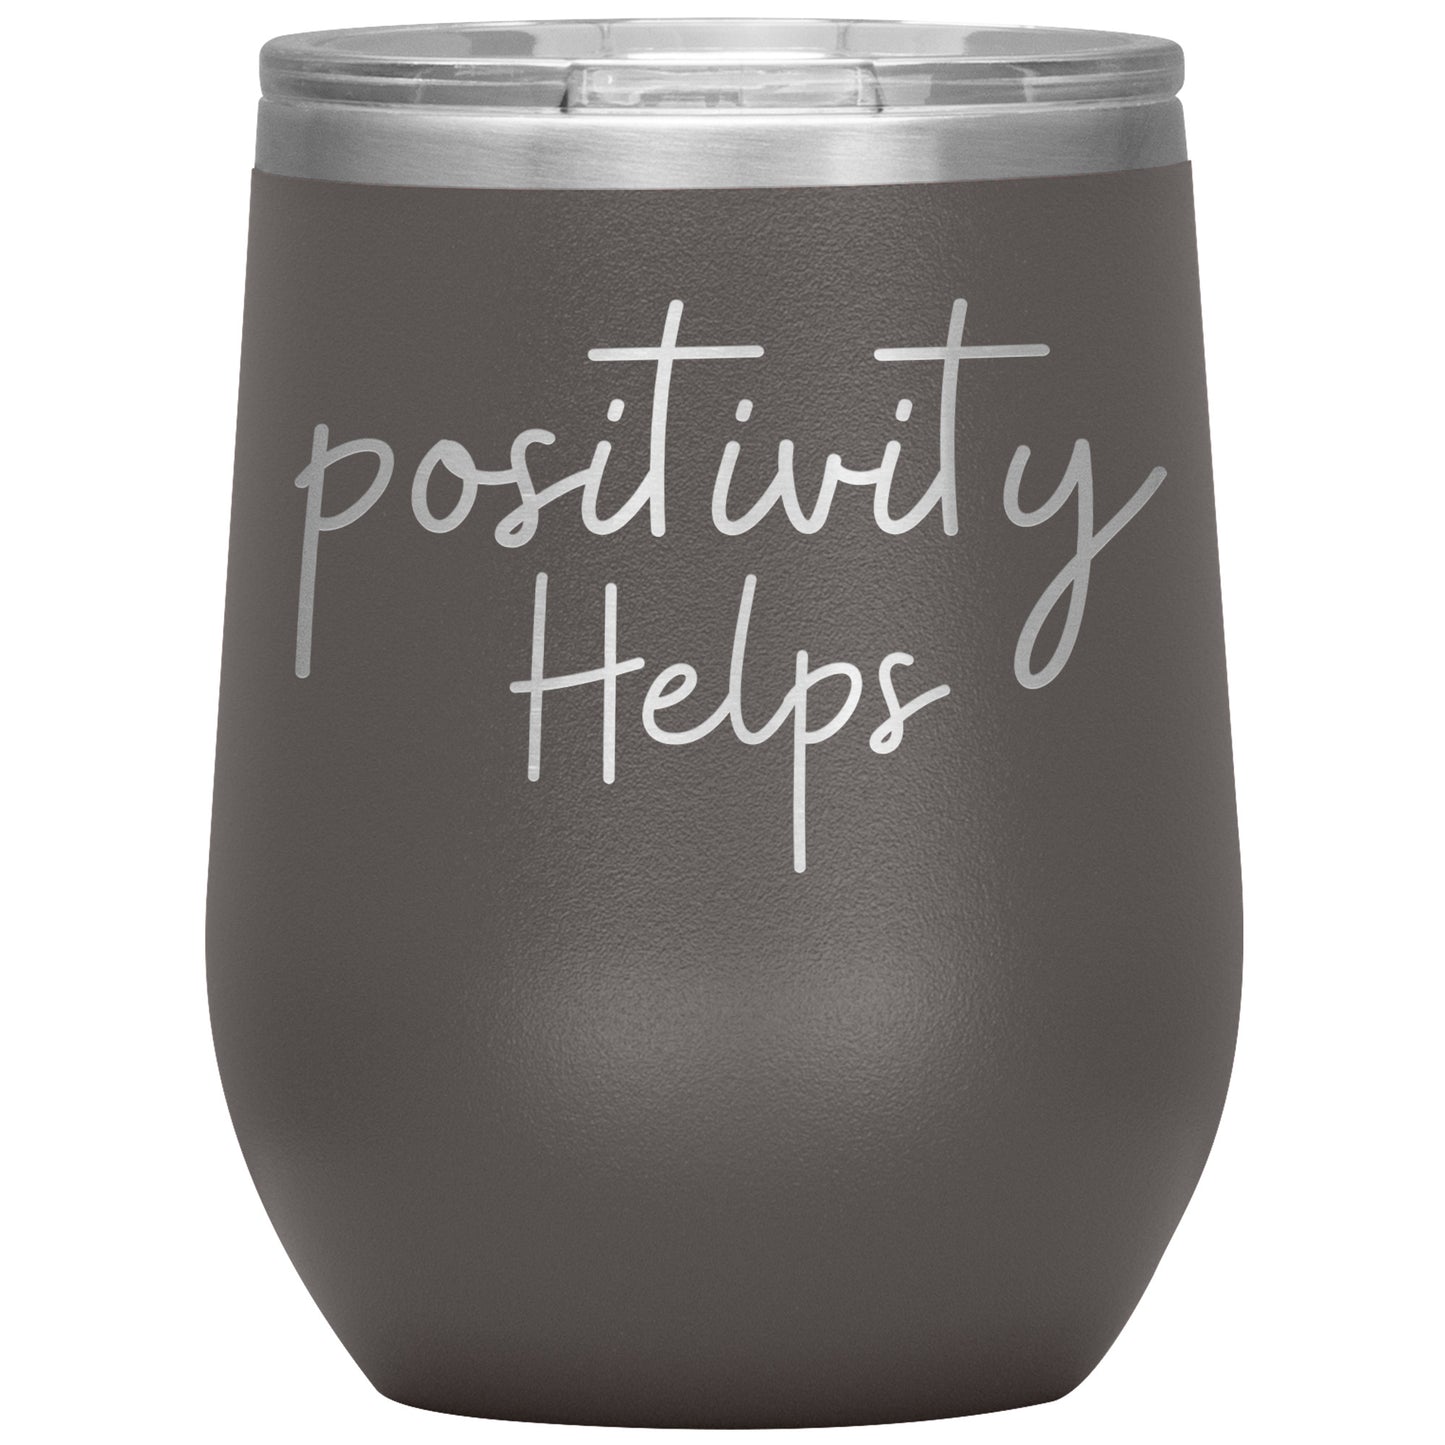 positivity Helps Tumbler